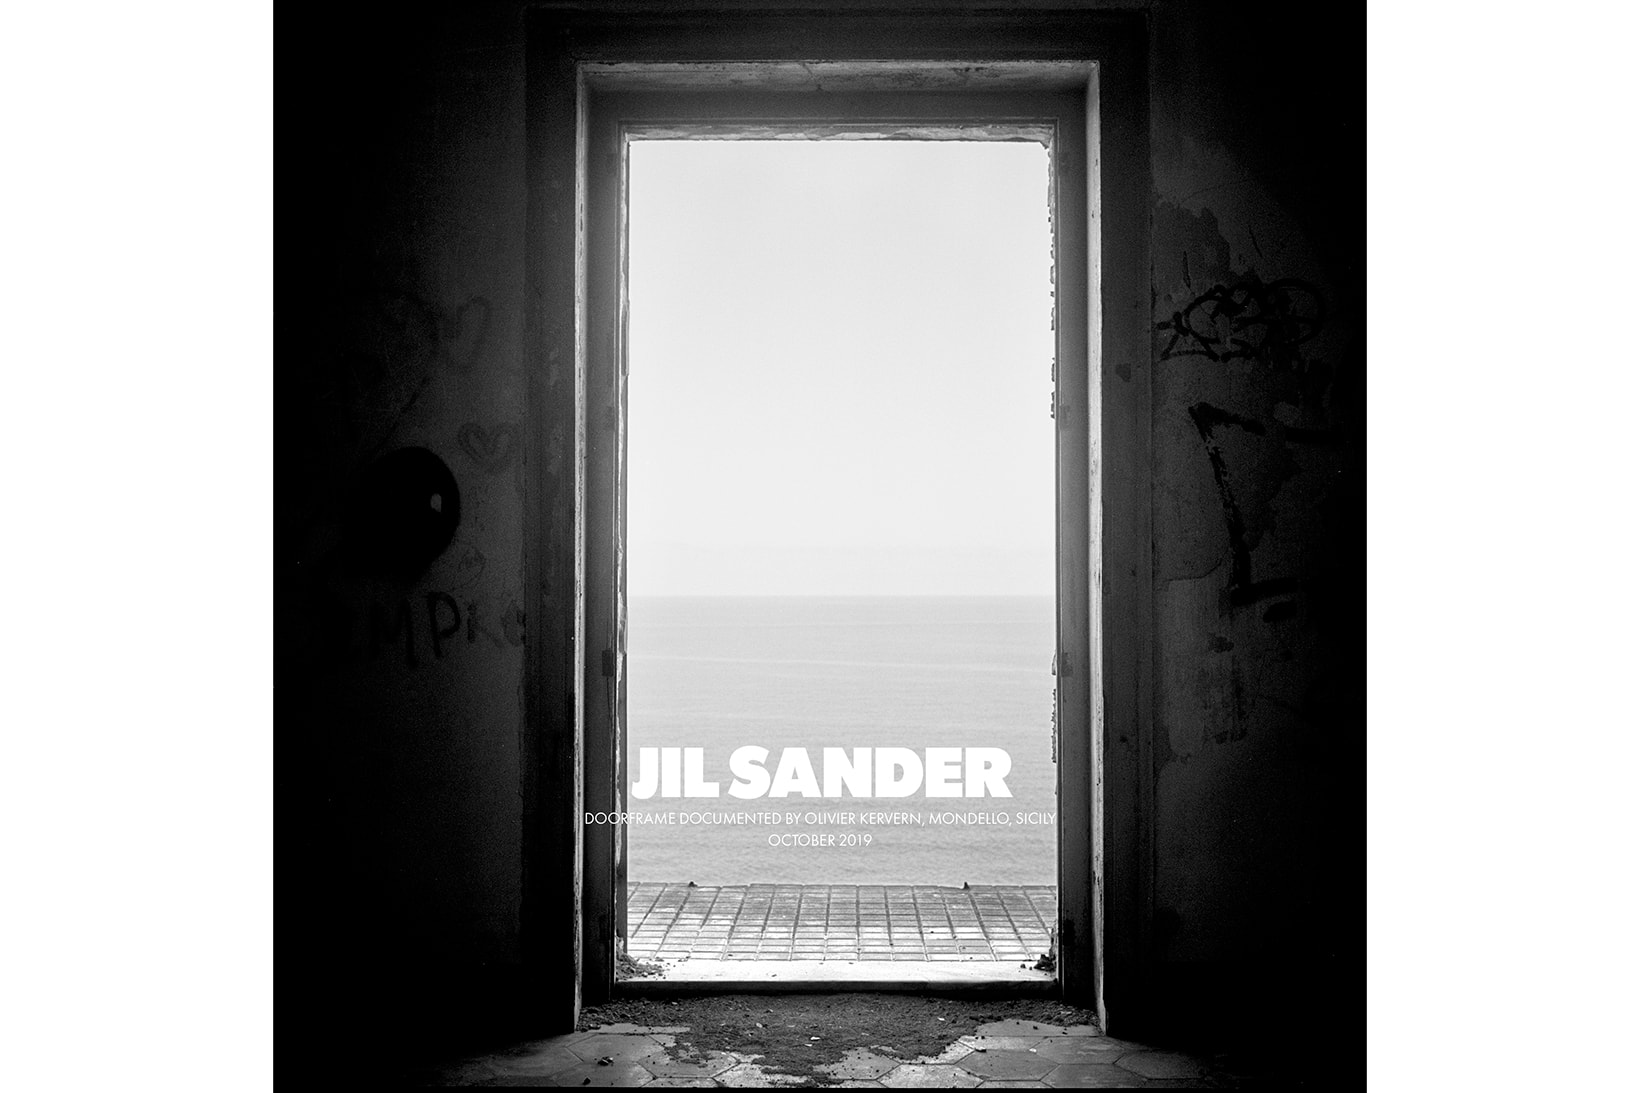 Jil Sander Spring/Summer 2020 Collection Campaign